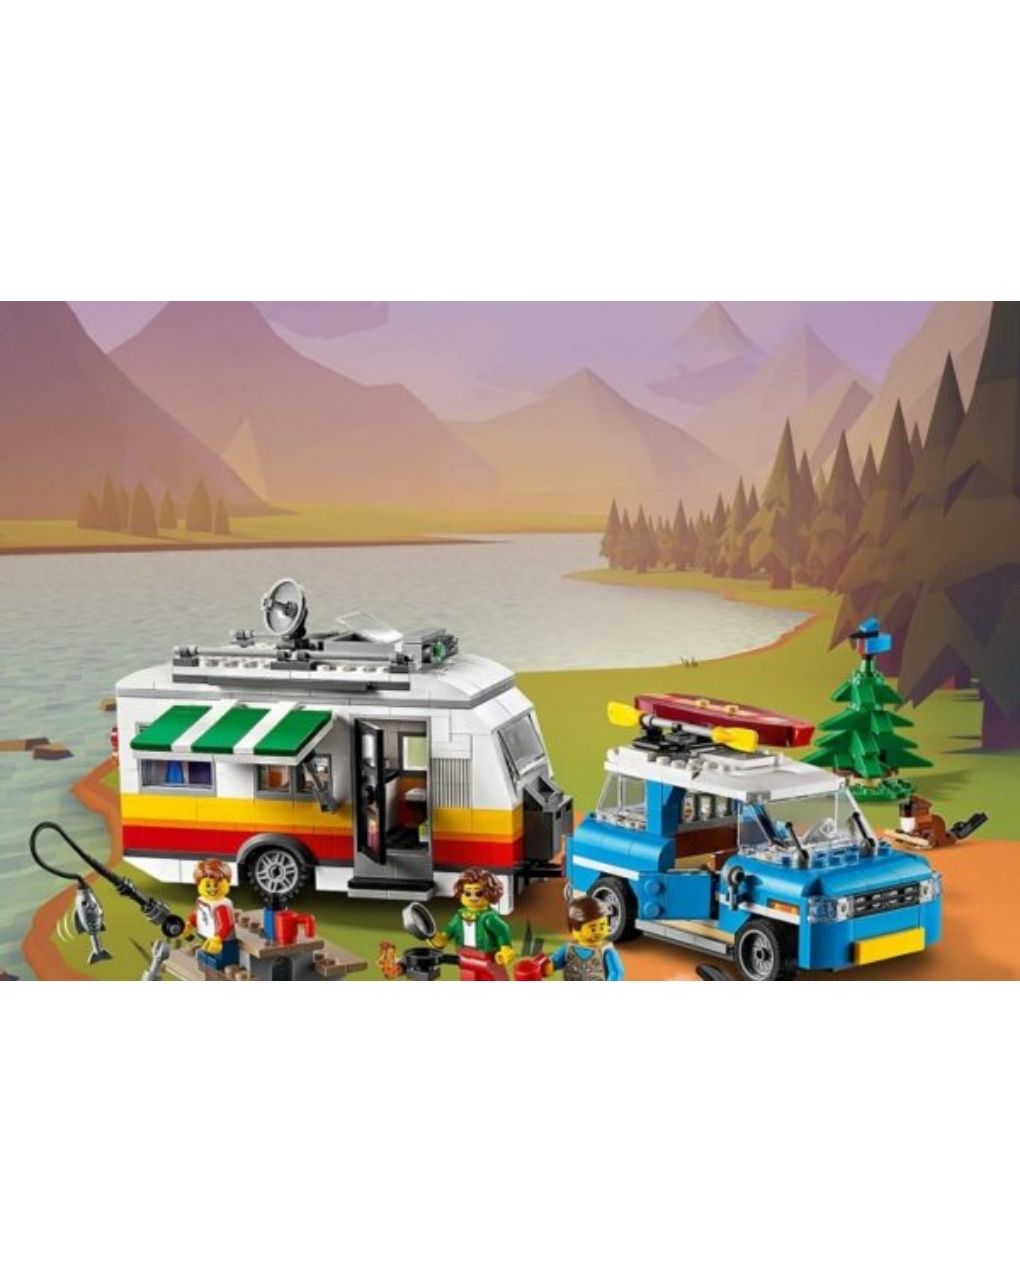 Lego creator οικογενειακές διακοπές με τροχόσπιτο 31108 - Lego